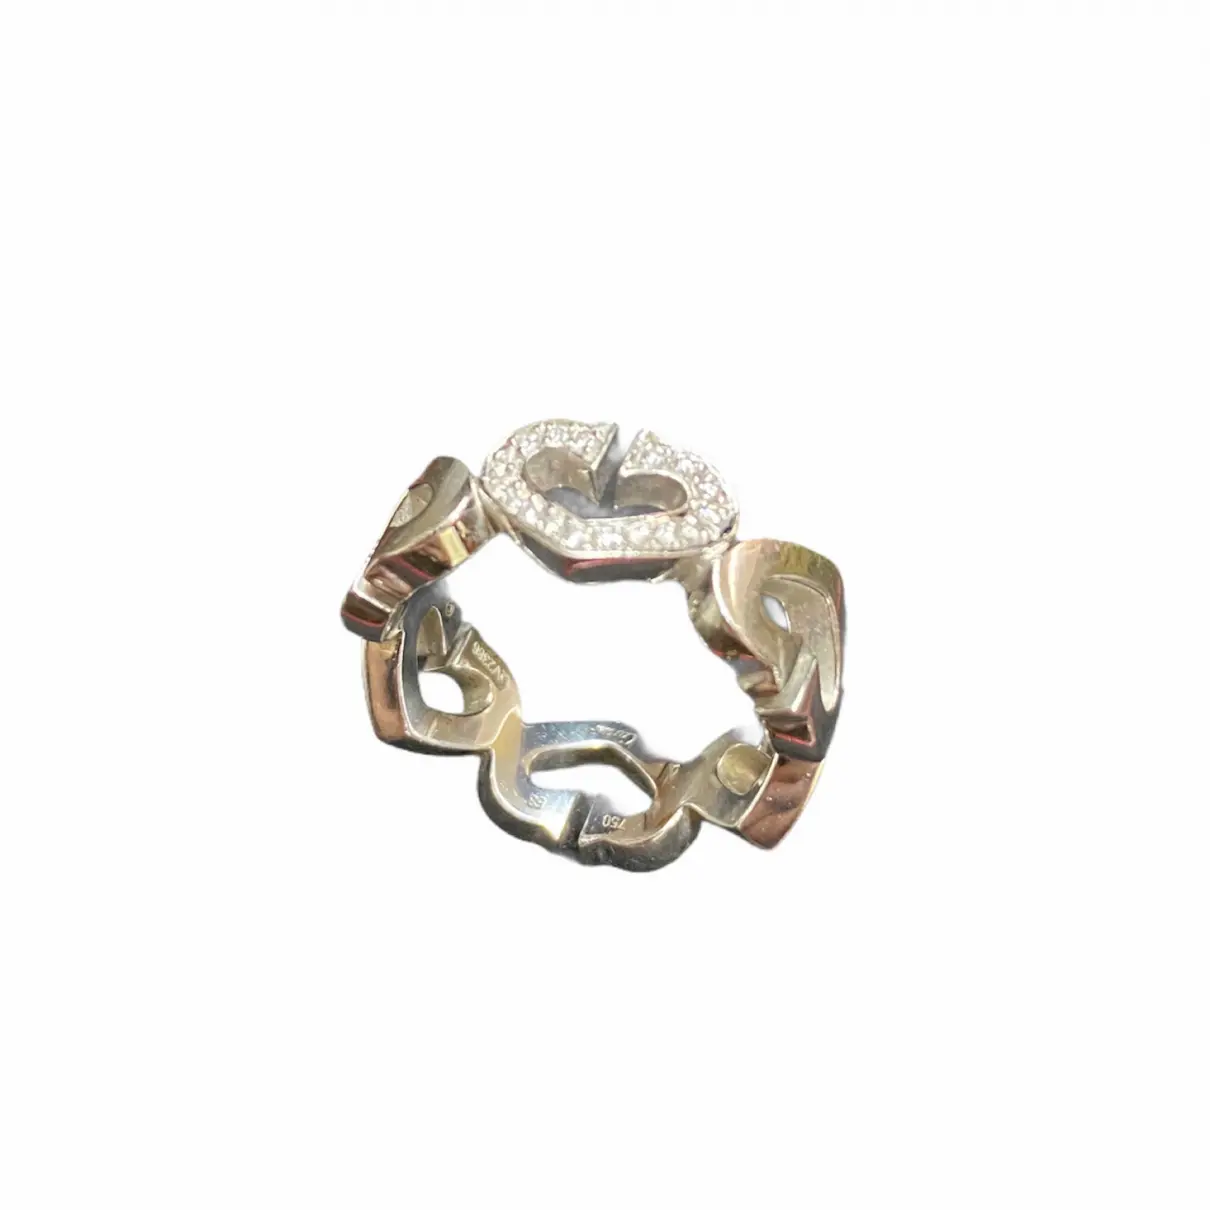 Buy Cartier C white gold ring online